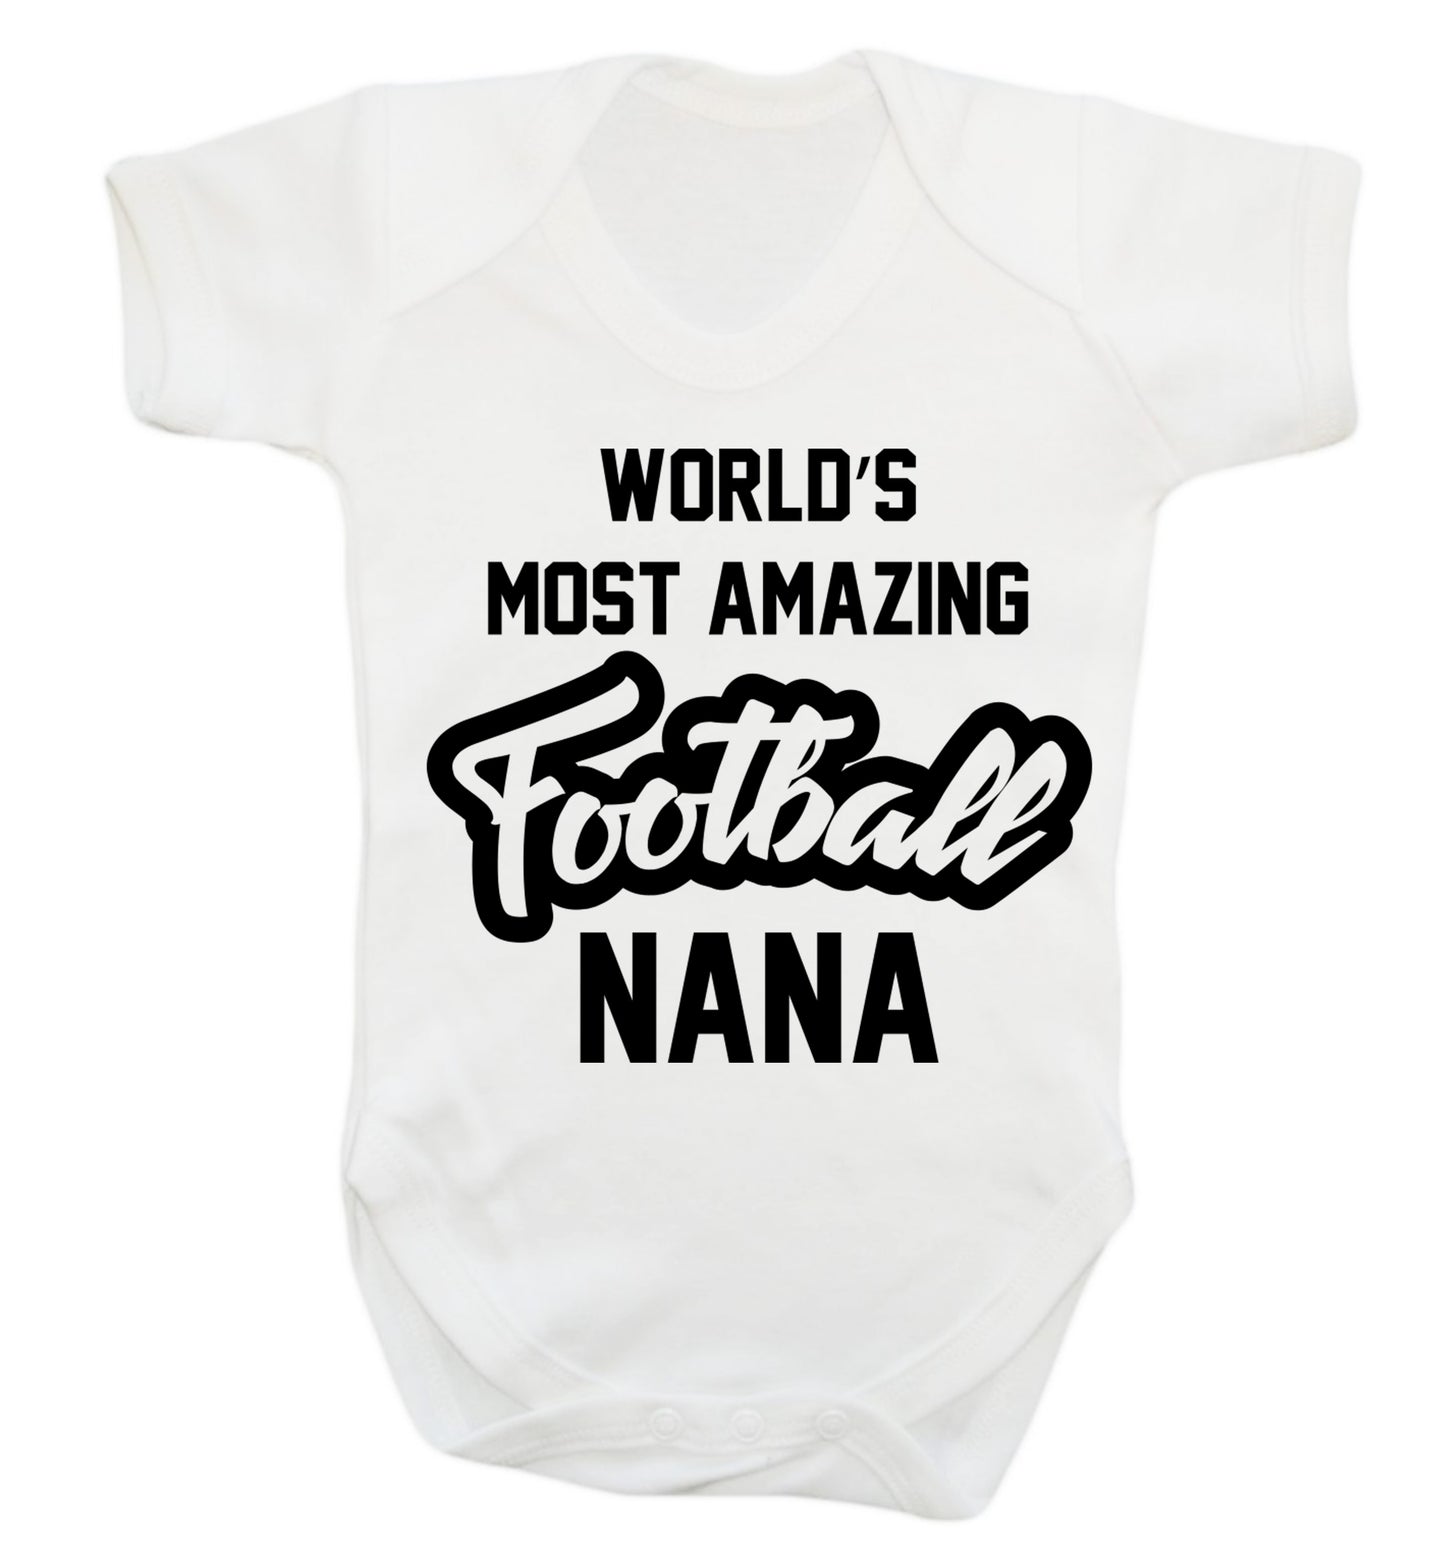 Worlds most amazing football nana Baby Vest white 18-24 months